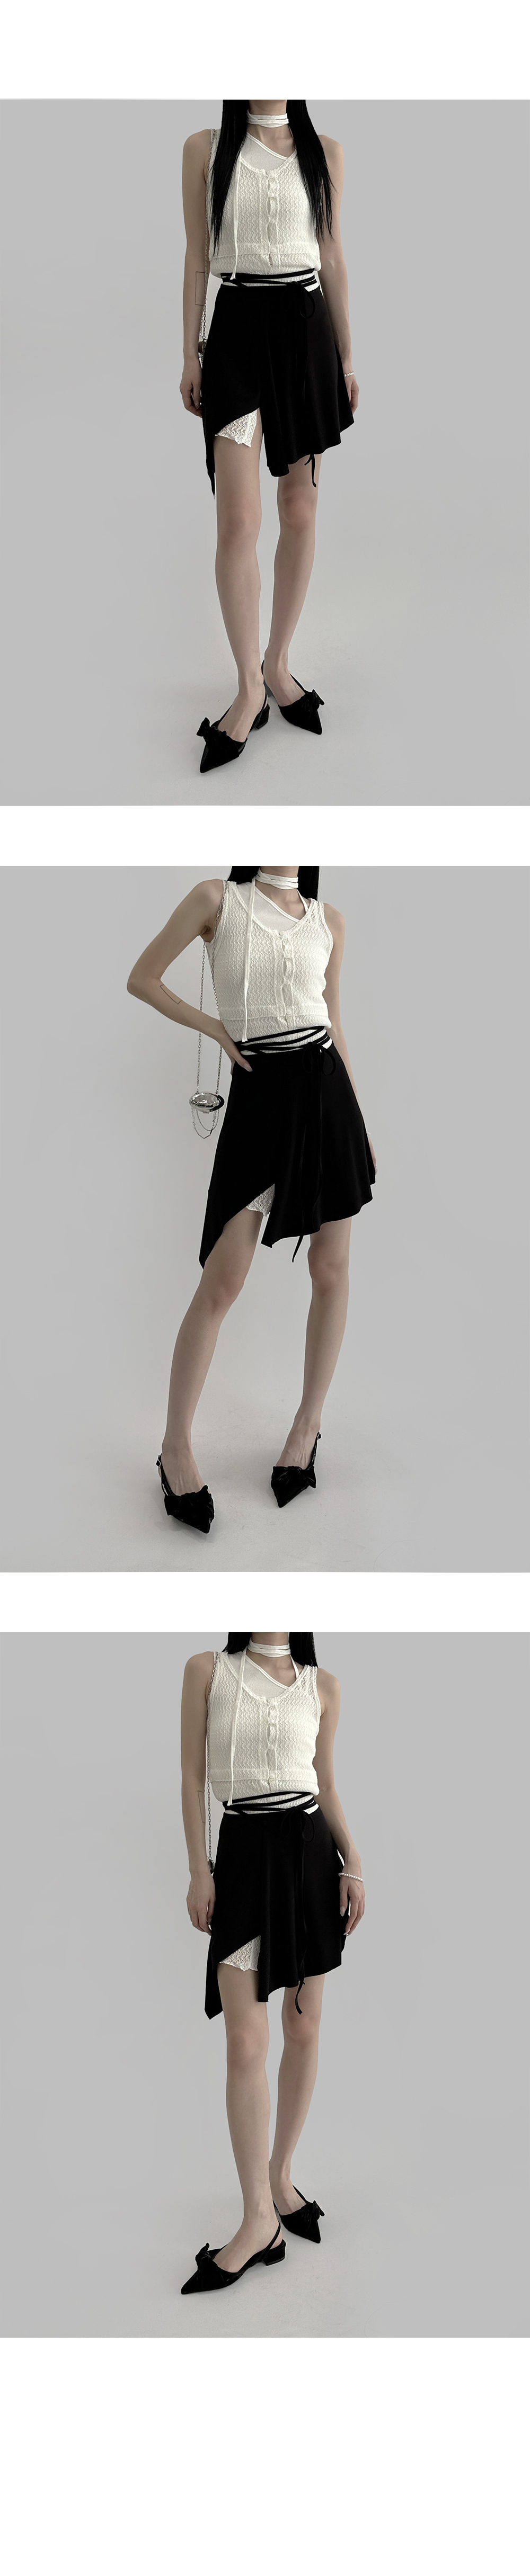 dress model image-S2L1